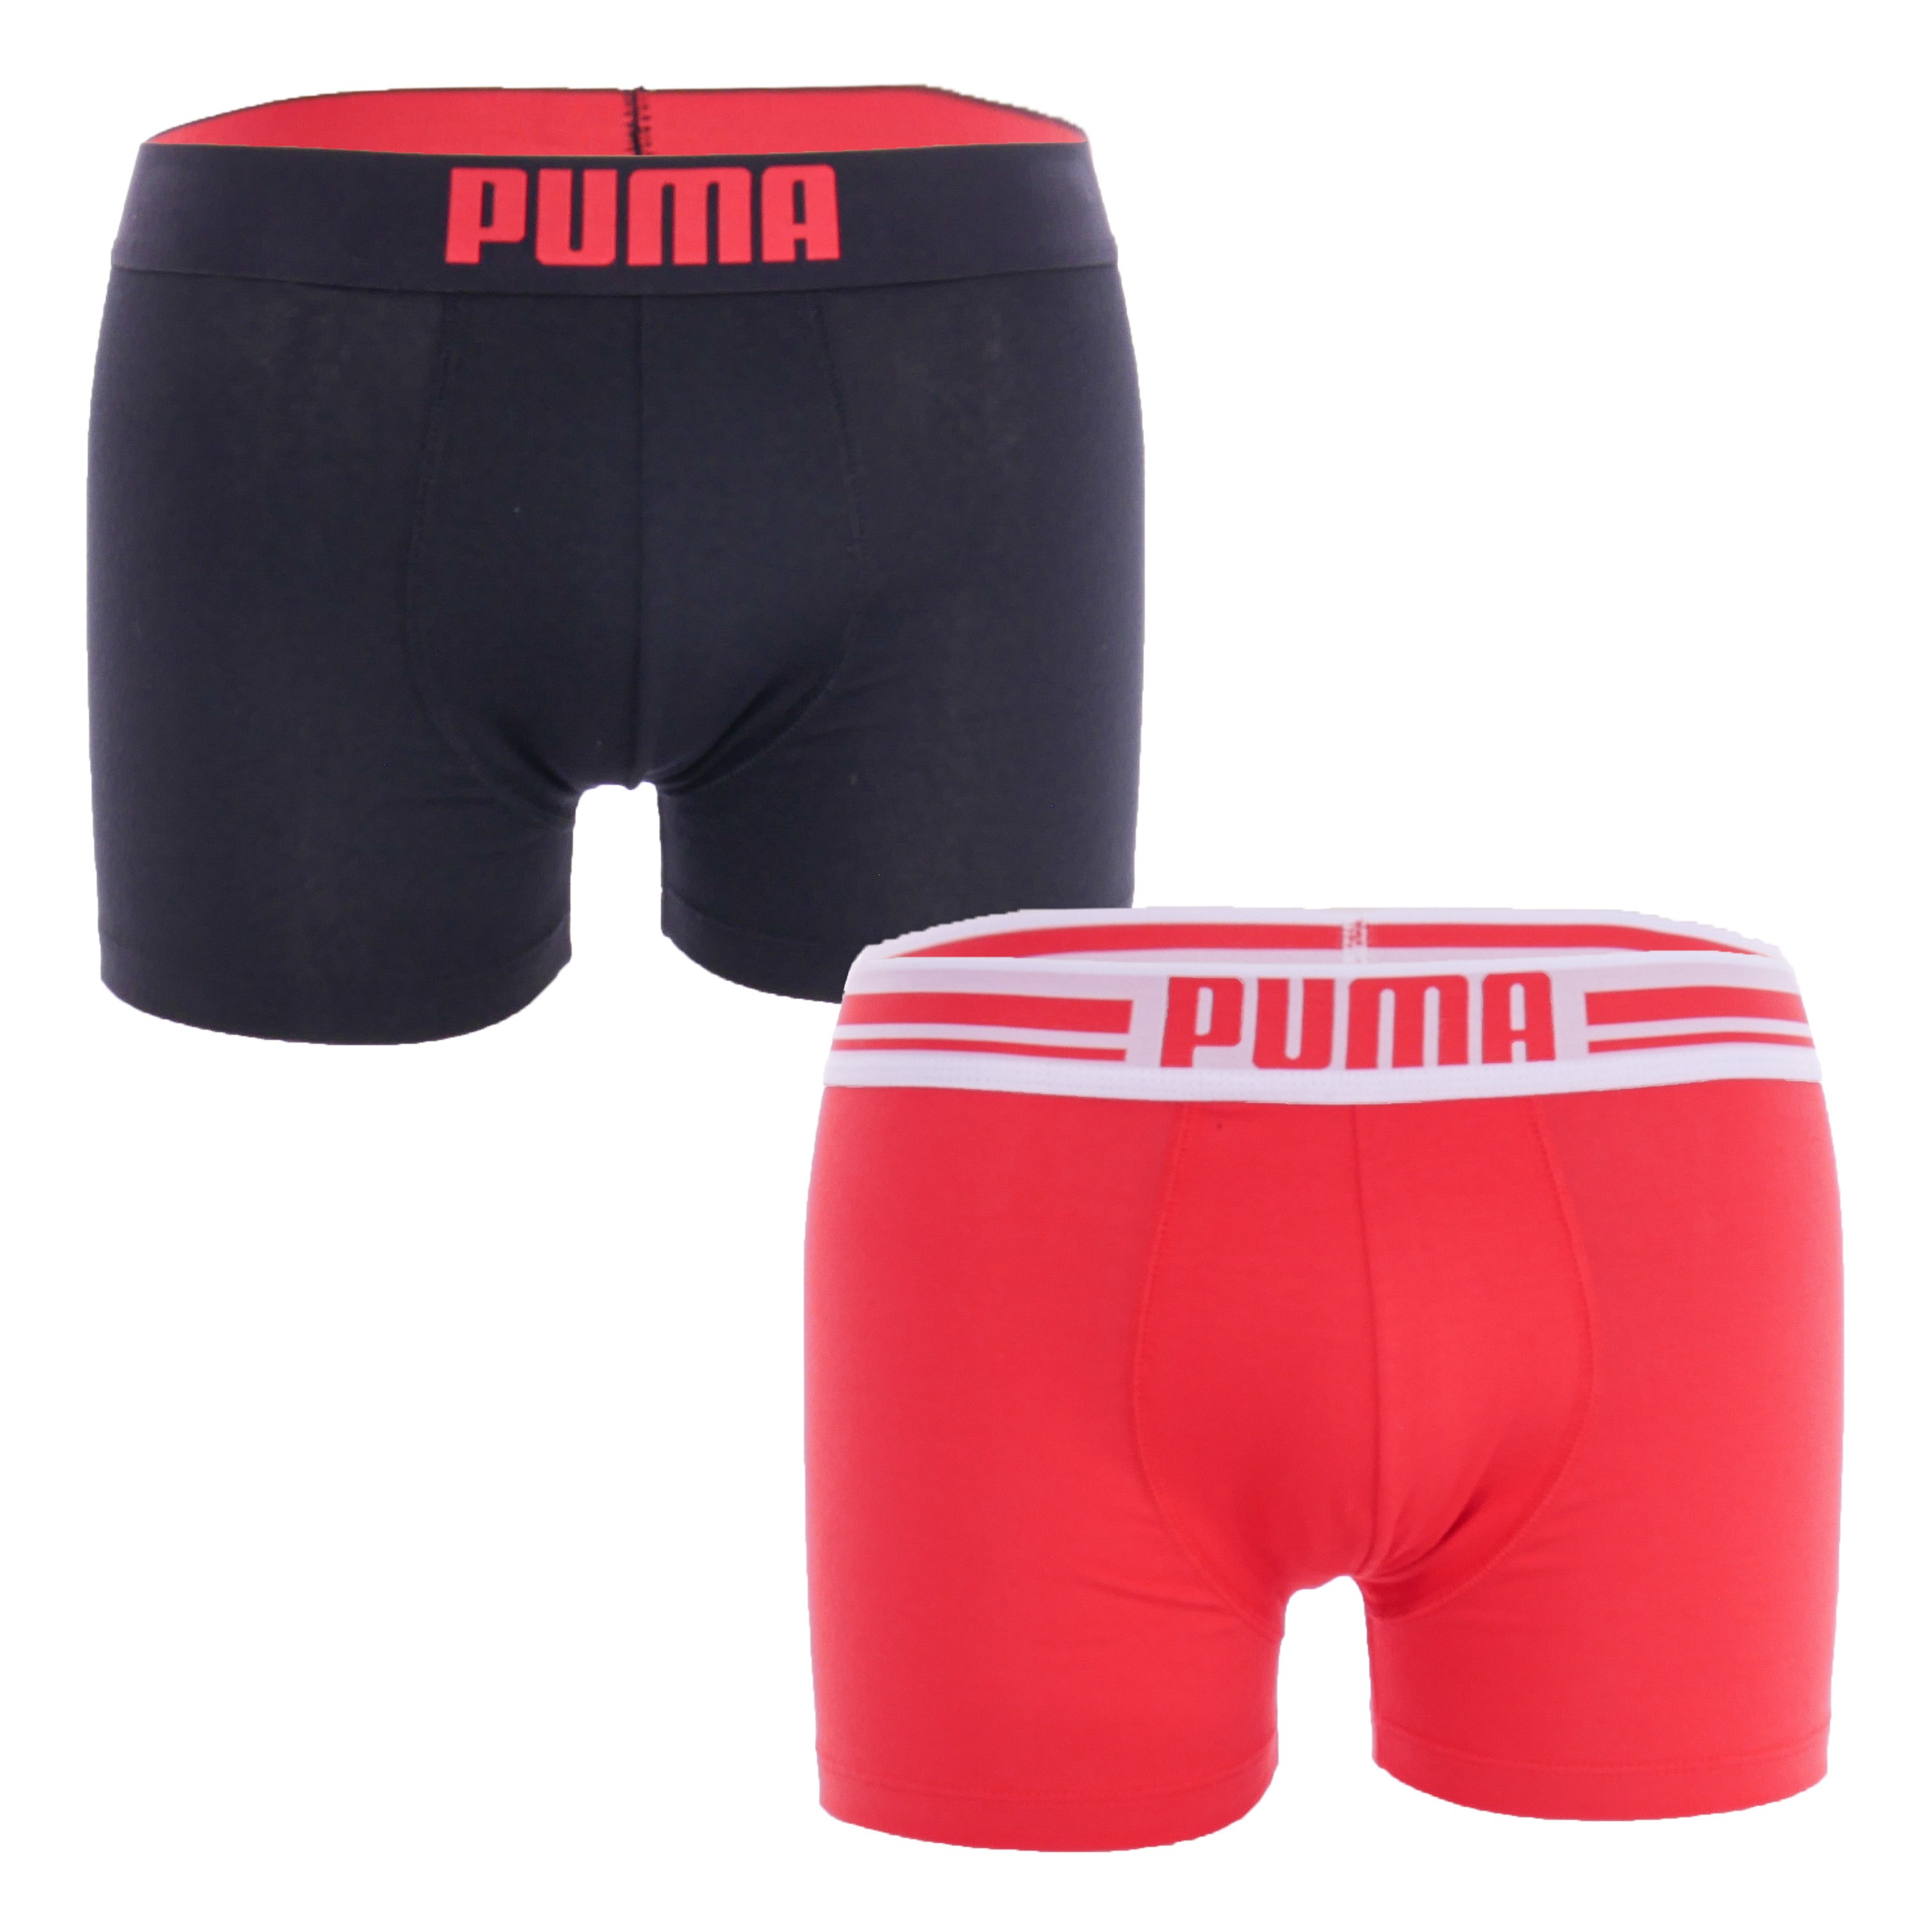 Boxer shorts Puma 2 Pack Basic Boxers White/ Black